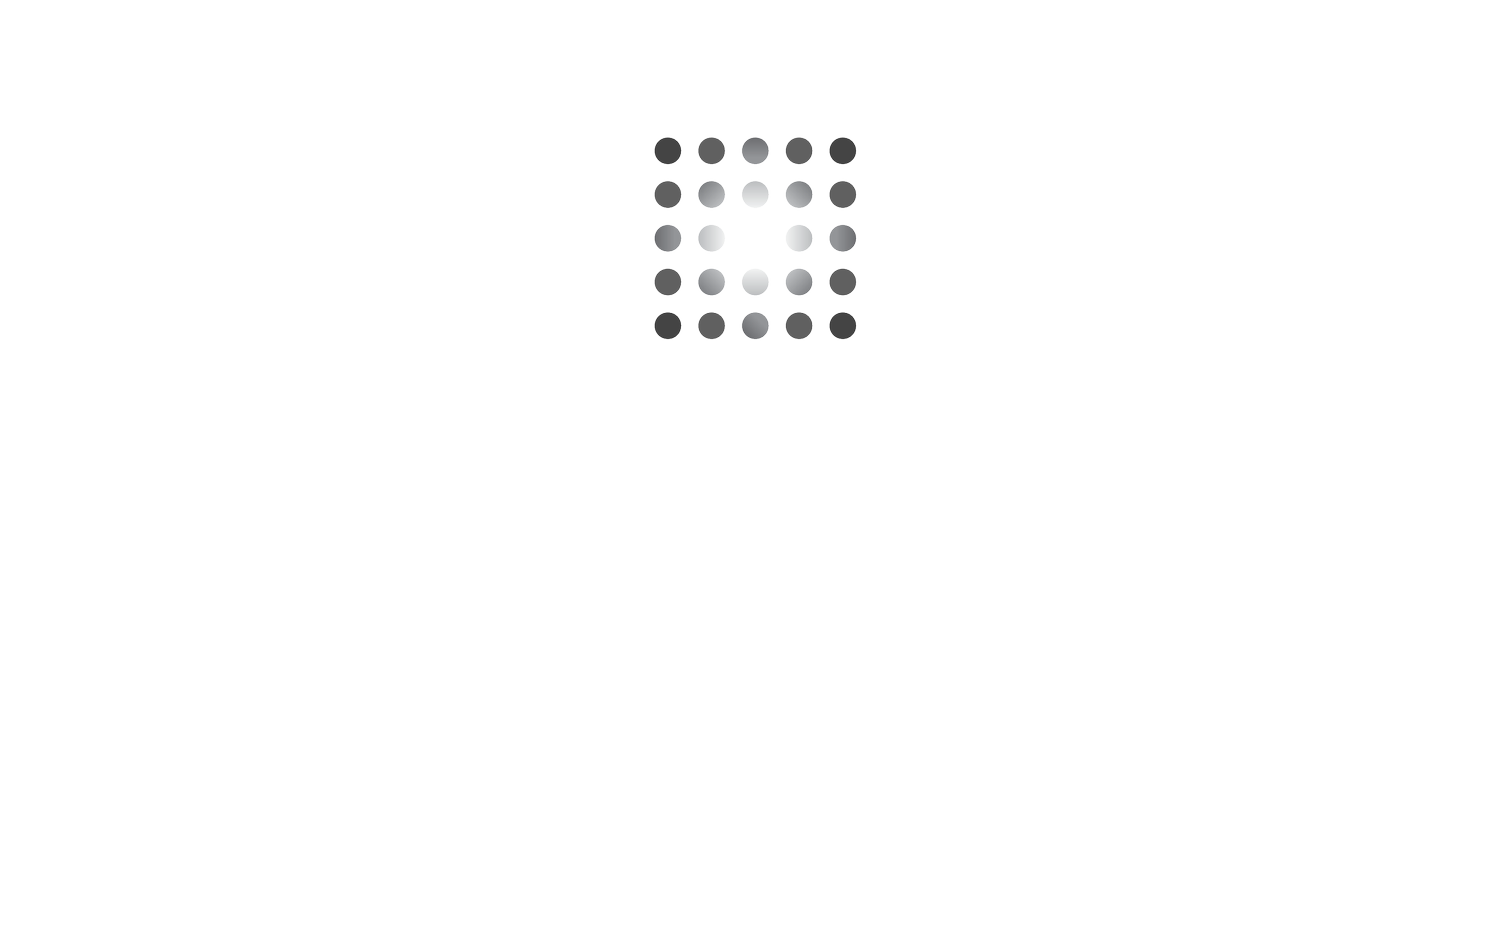 Citizen Collab